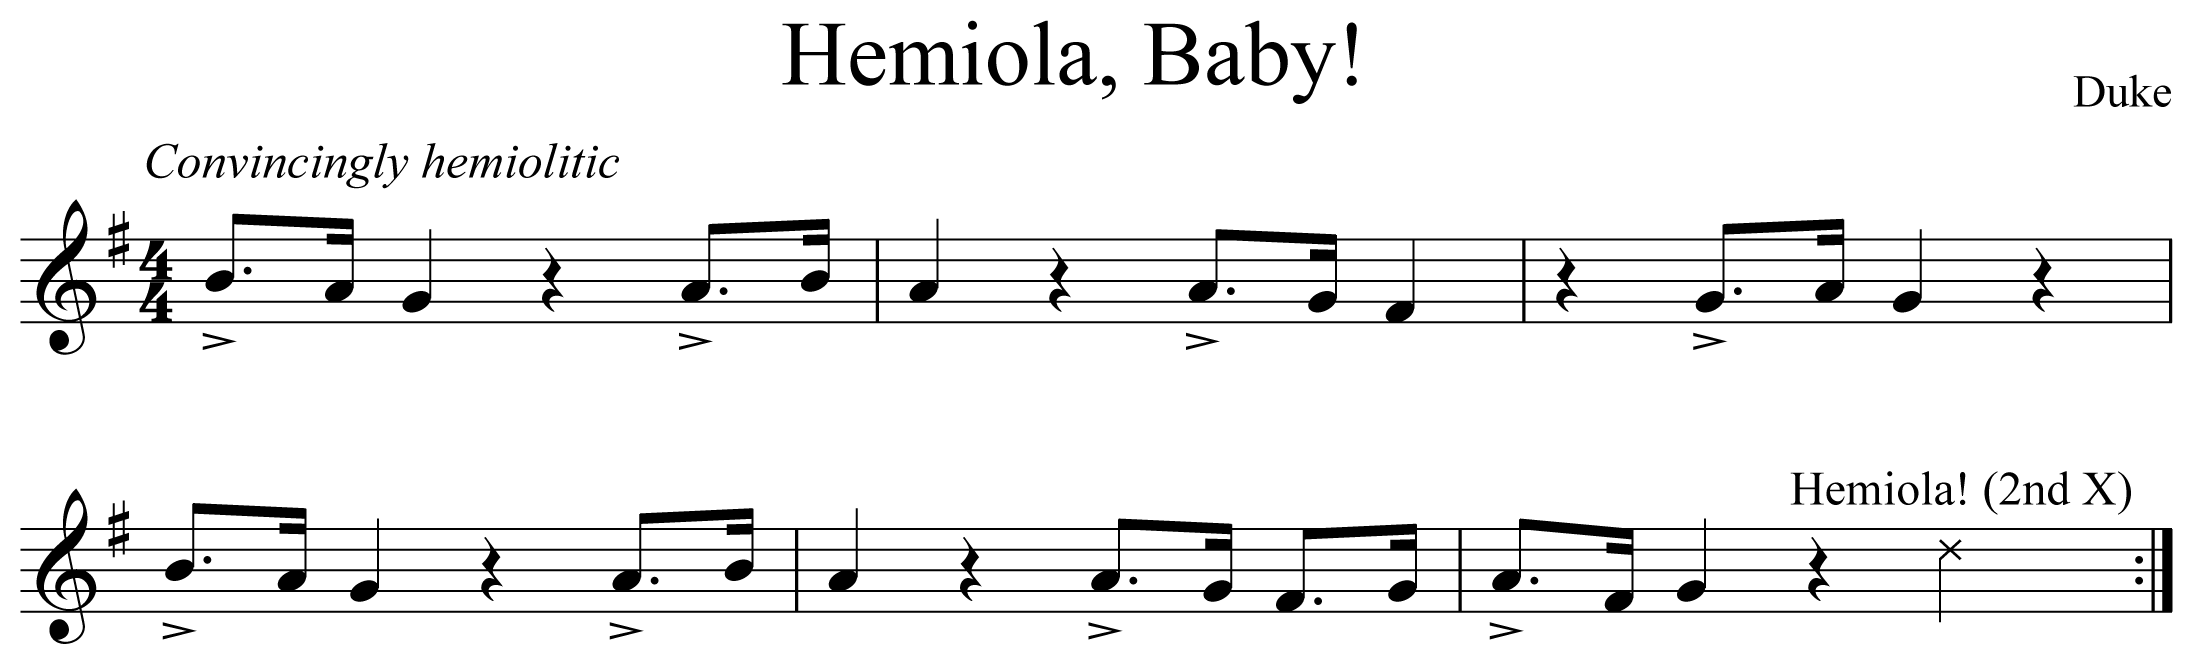 Hemiola, Baby! Notation Trumpet